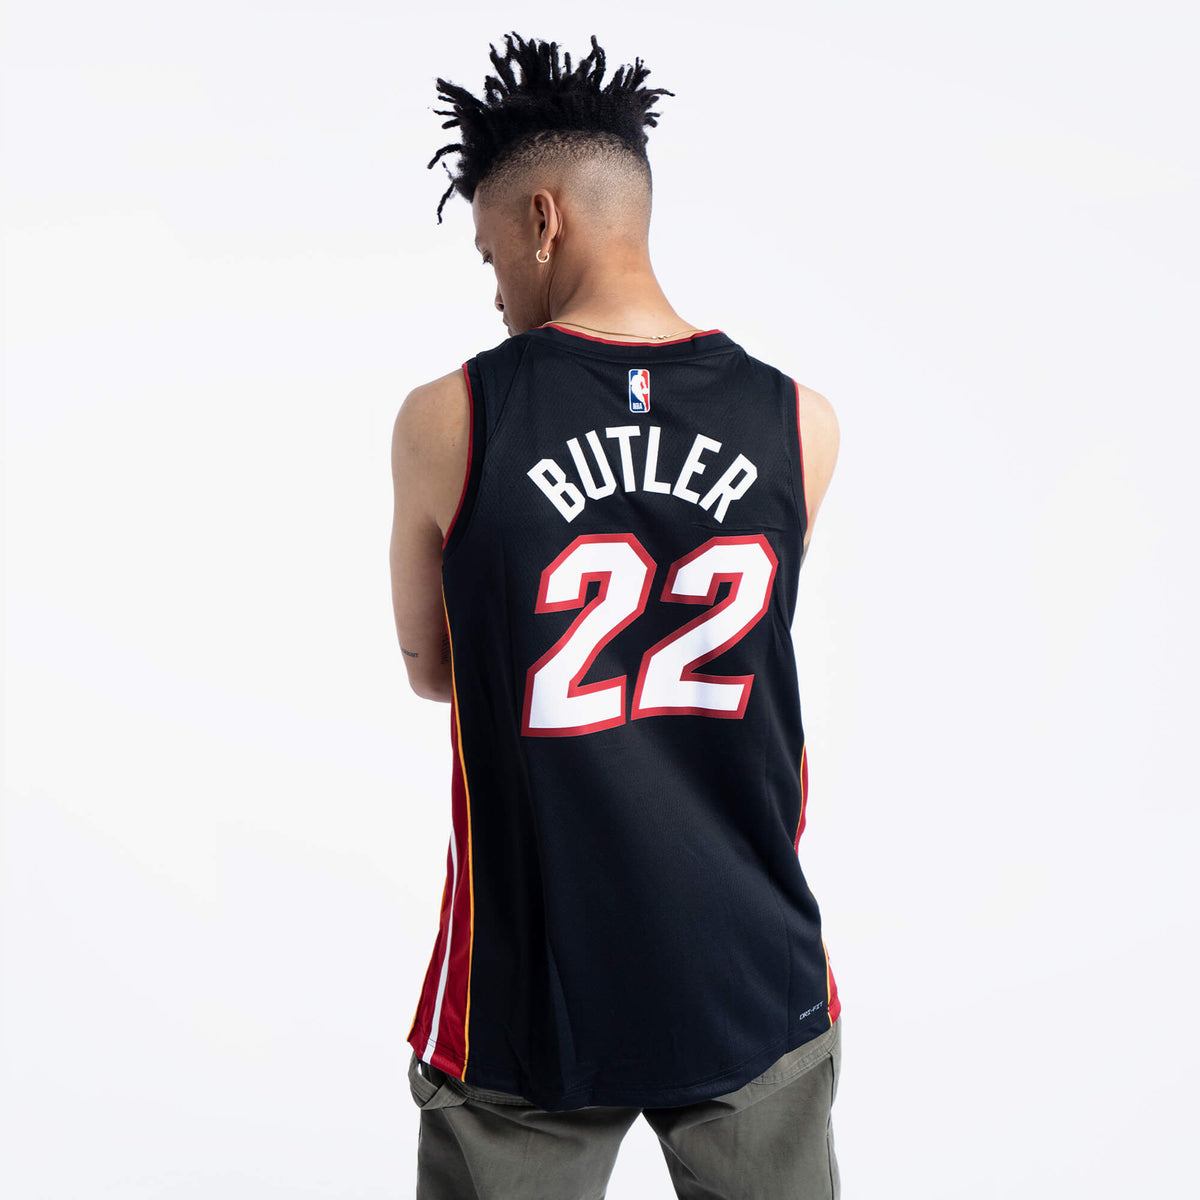 Jimmy Butler Nike Miami HEAT Icon Black Swingman Jersey – Miami HEAT Store